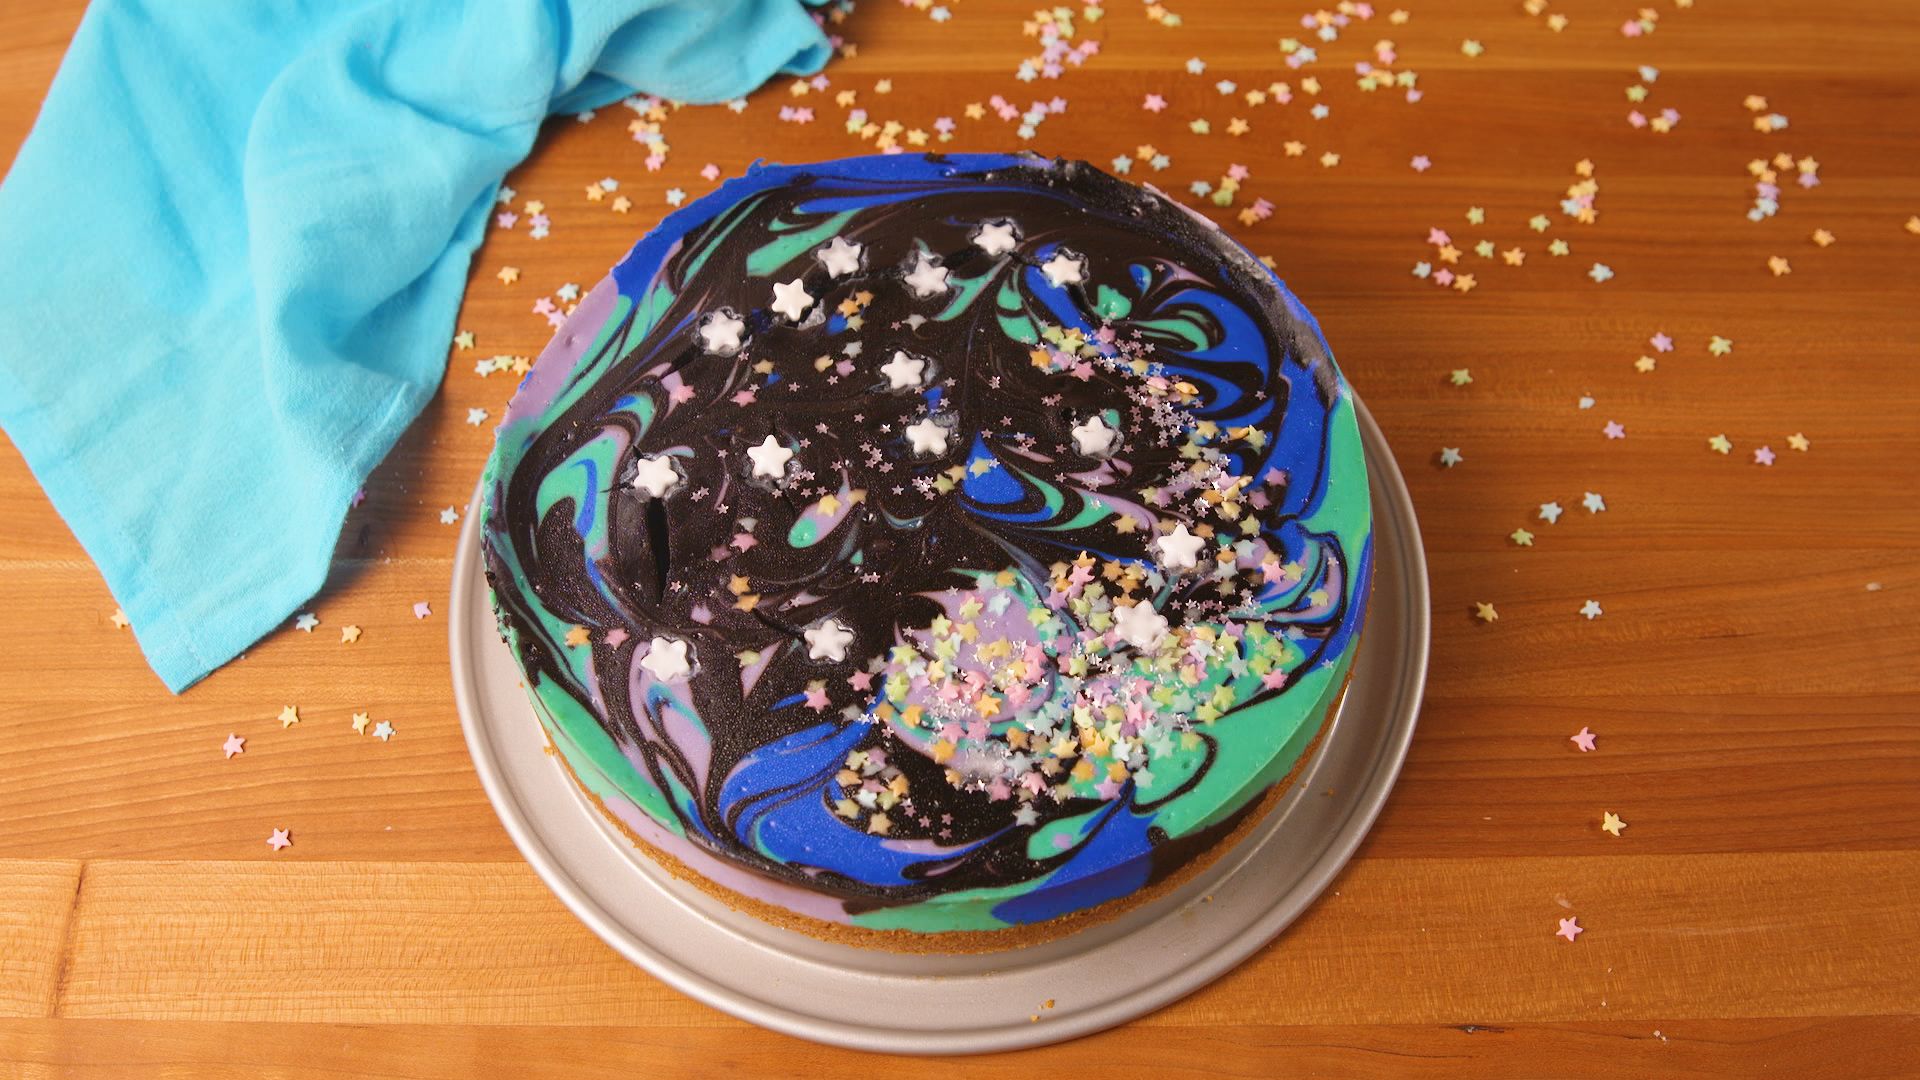 20 Best Kids Birthday Cakes Fun Cake Recipes For Kids Delish Com